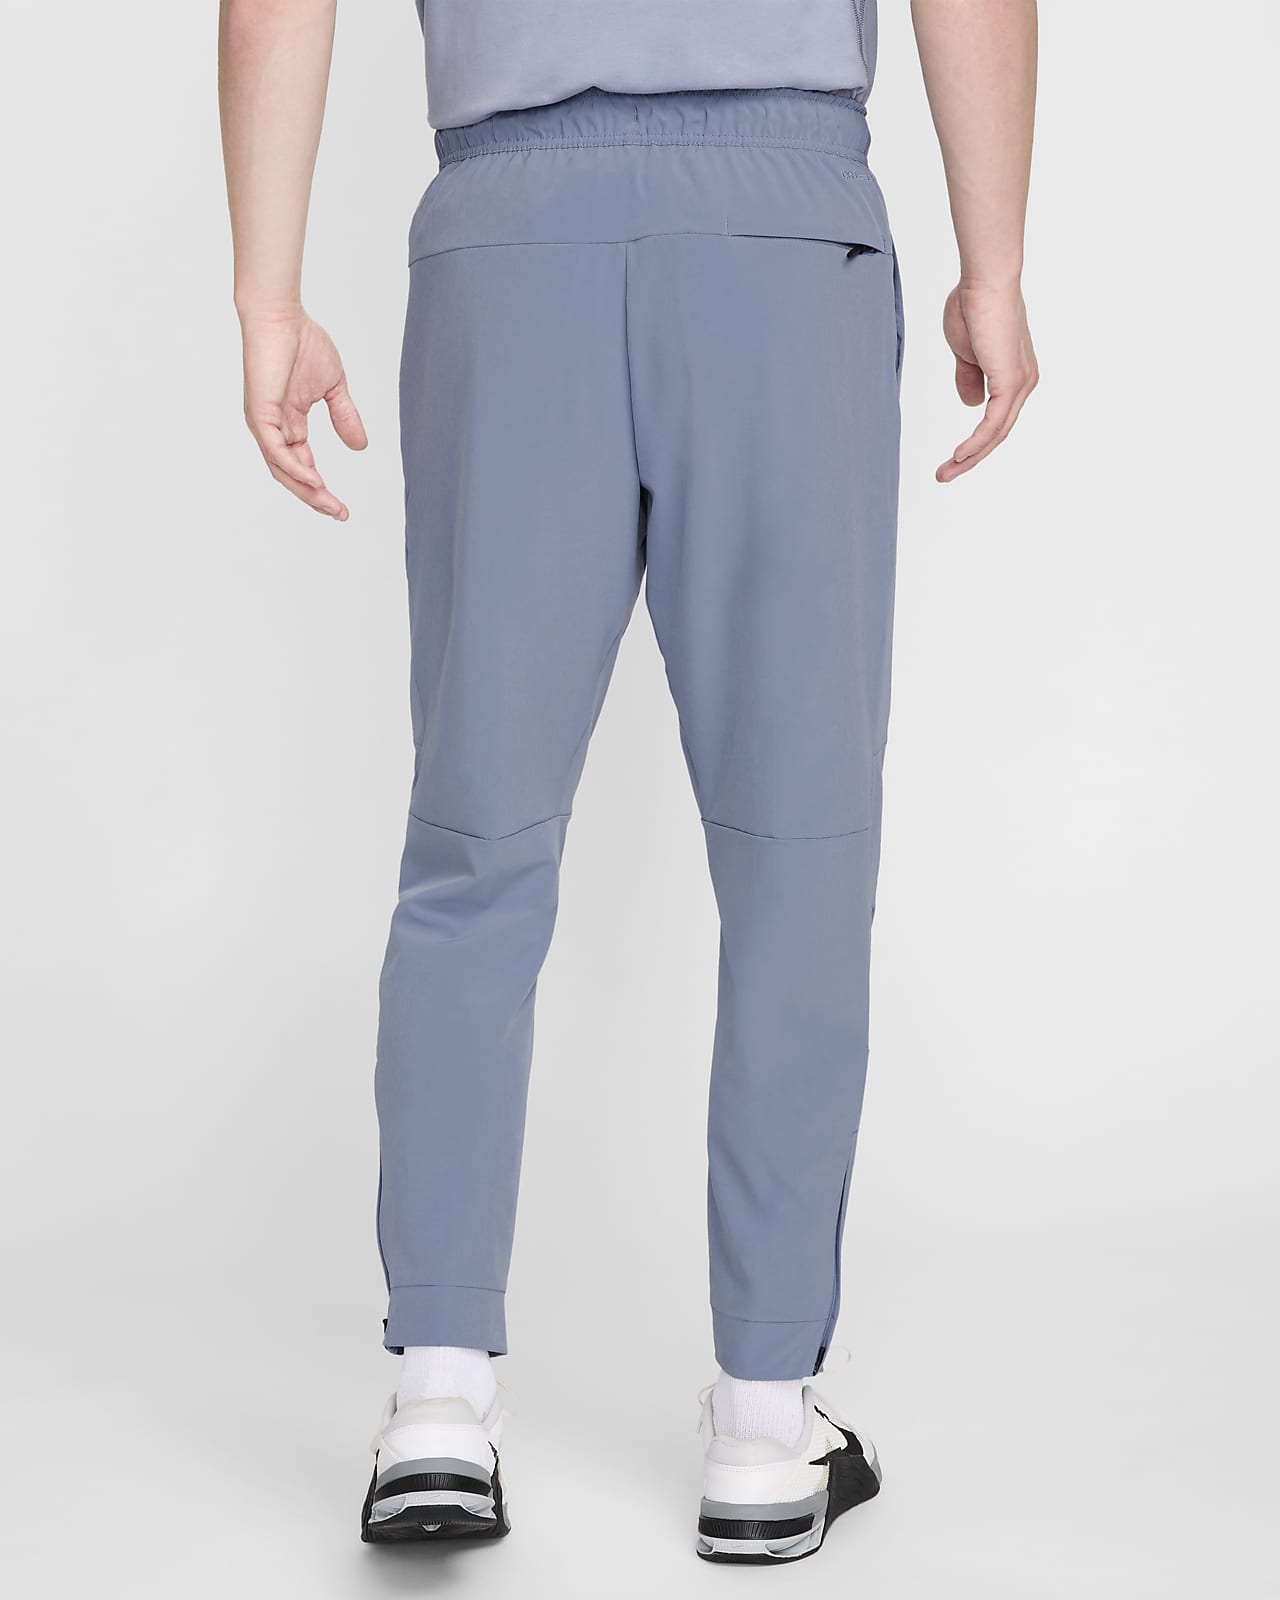 Nike Unlimited Men's Dri-FIT Zippered Cuff Versatile Pants.